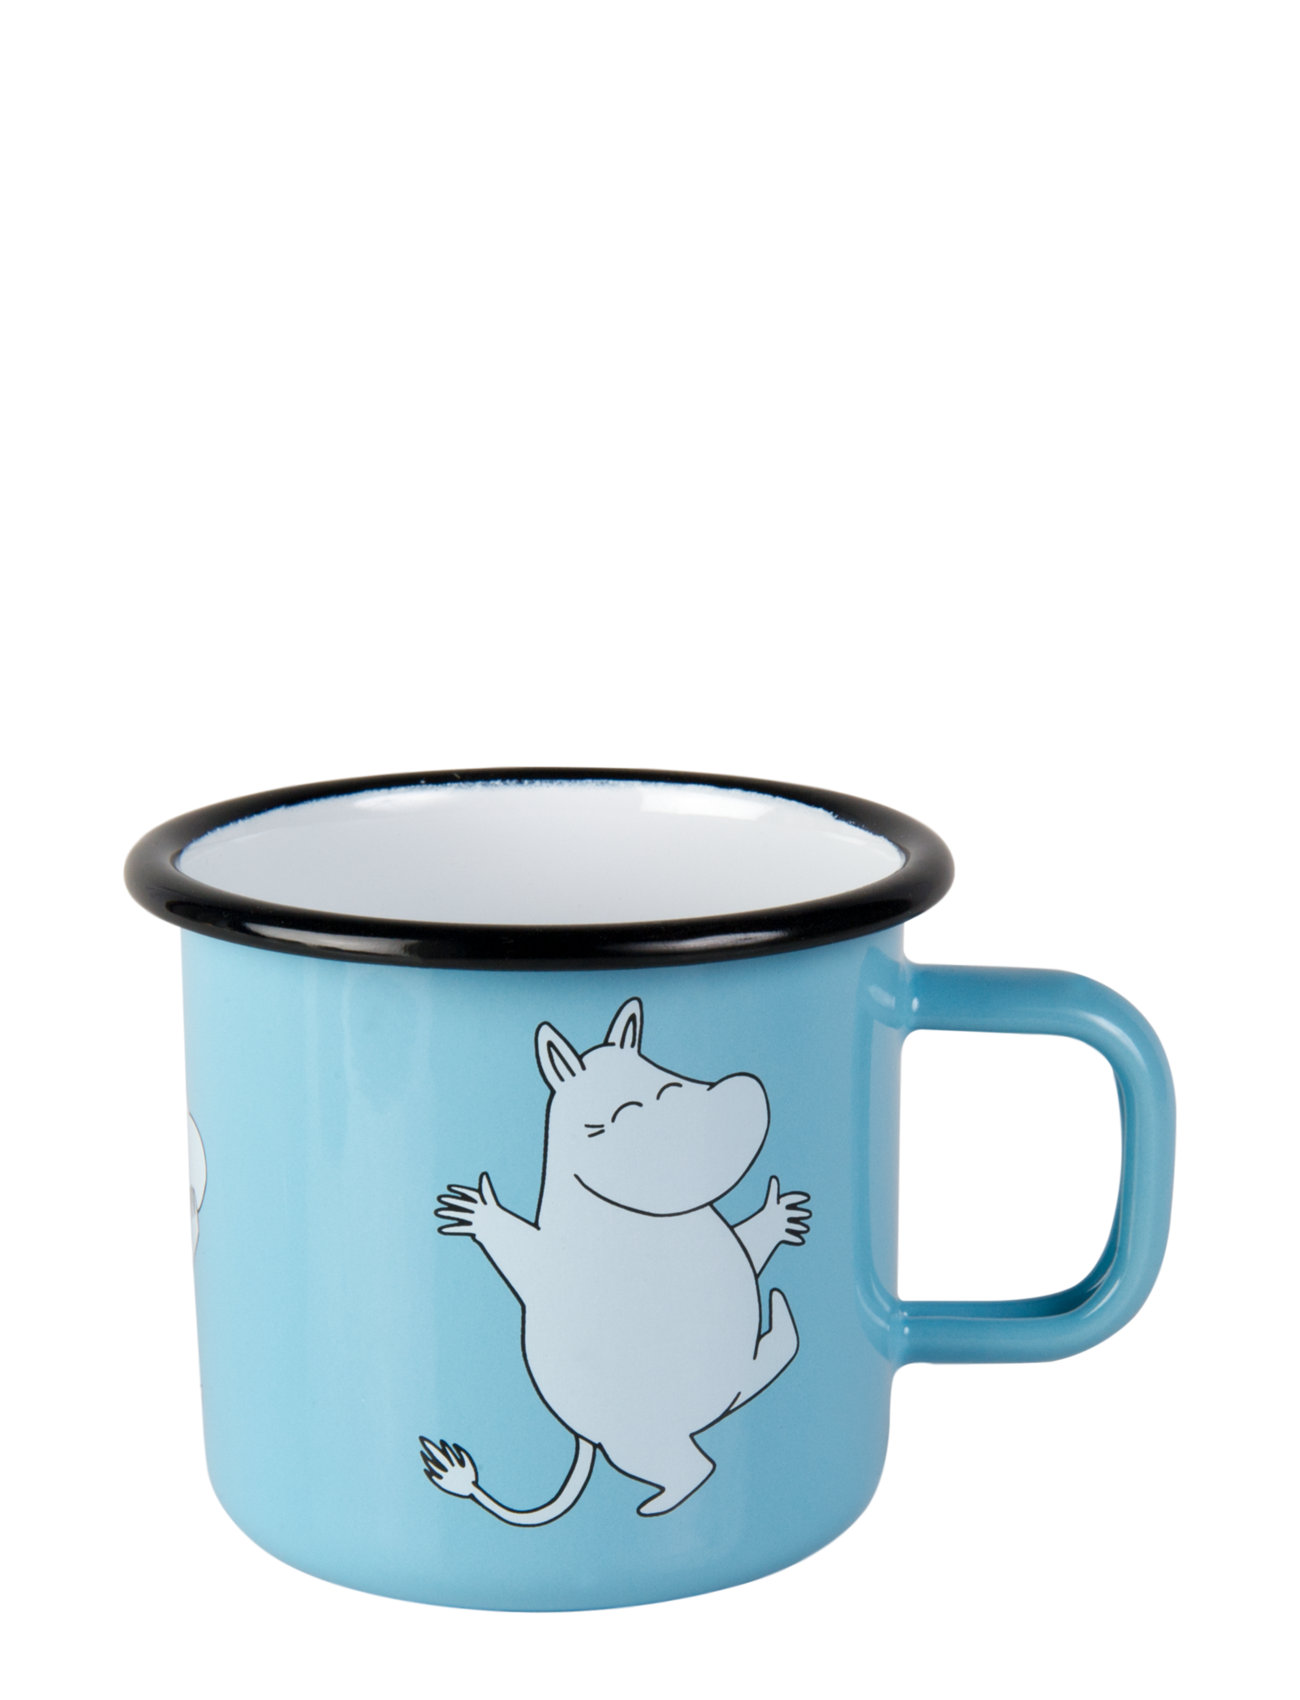 Moomin Enamel Mug 25Cl Moomin Home Tableware Cups & Mugs Coffee Cups Blue Moomin